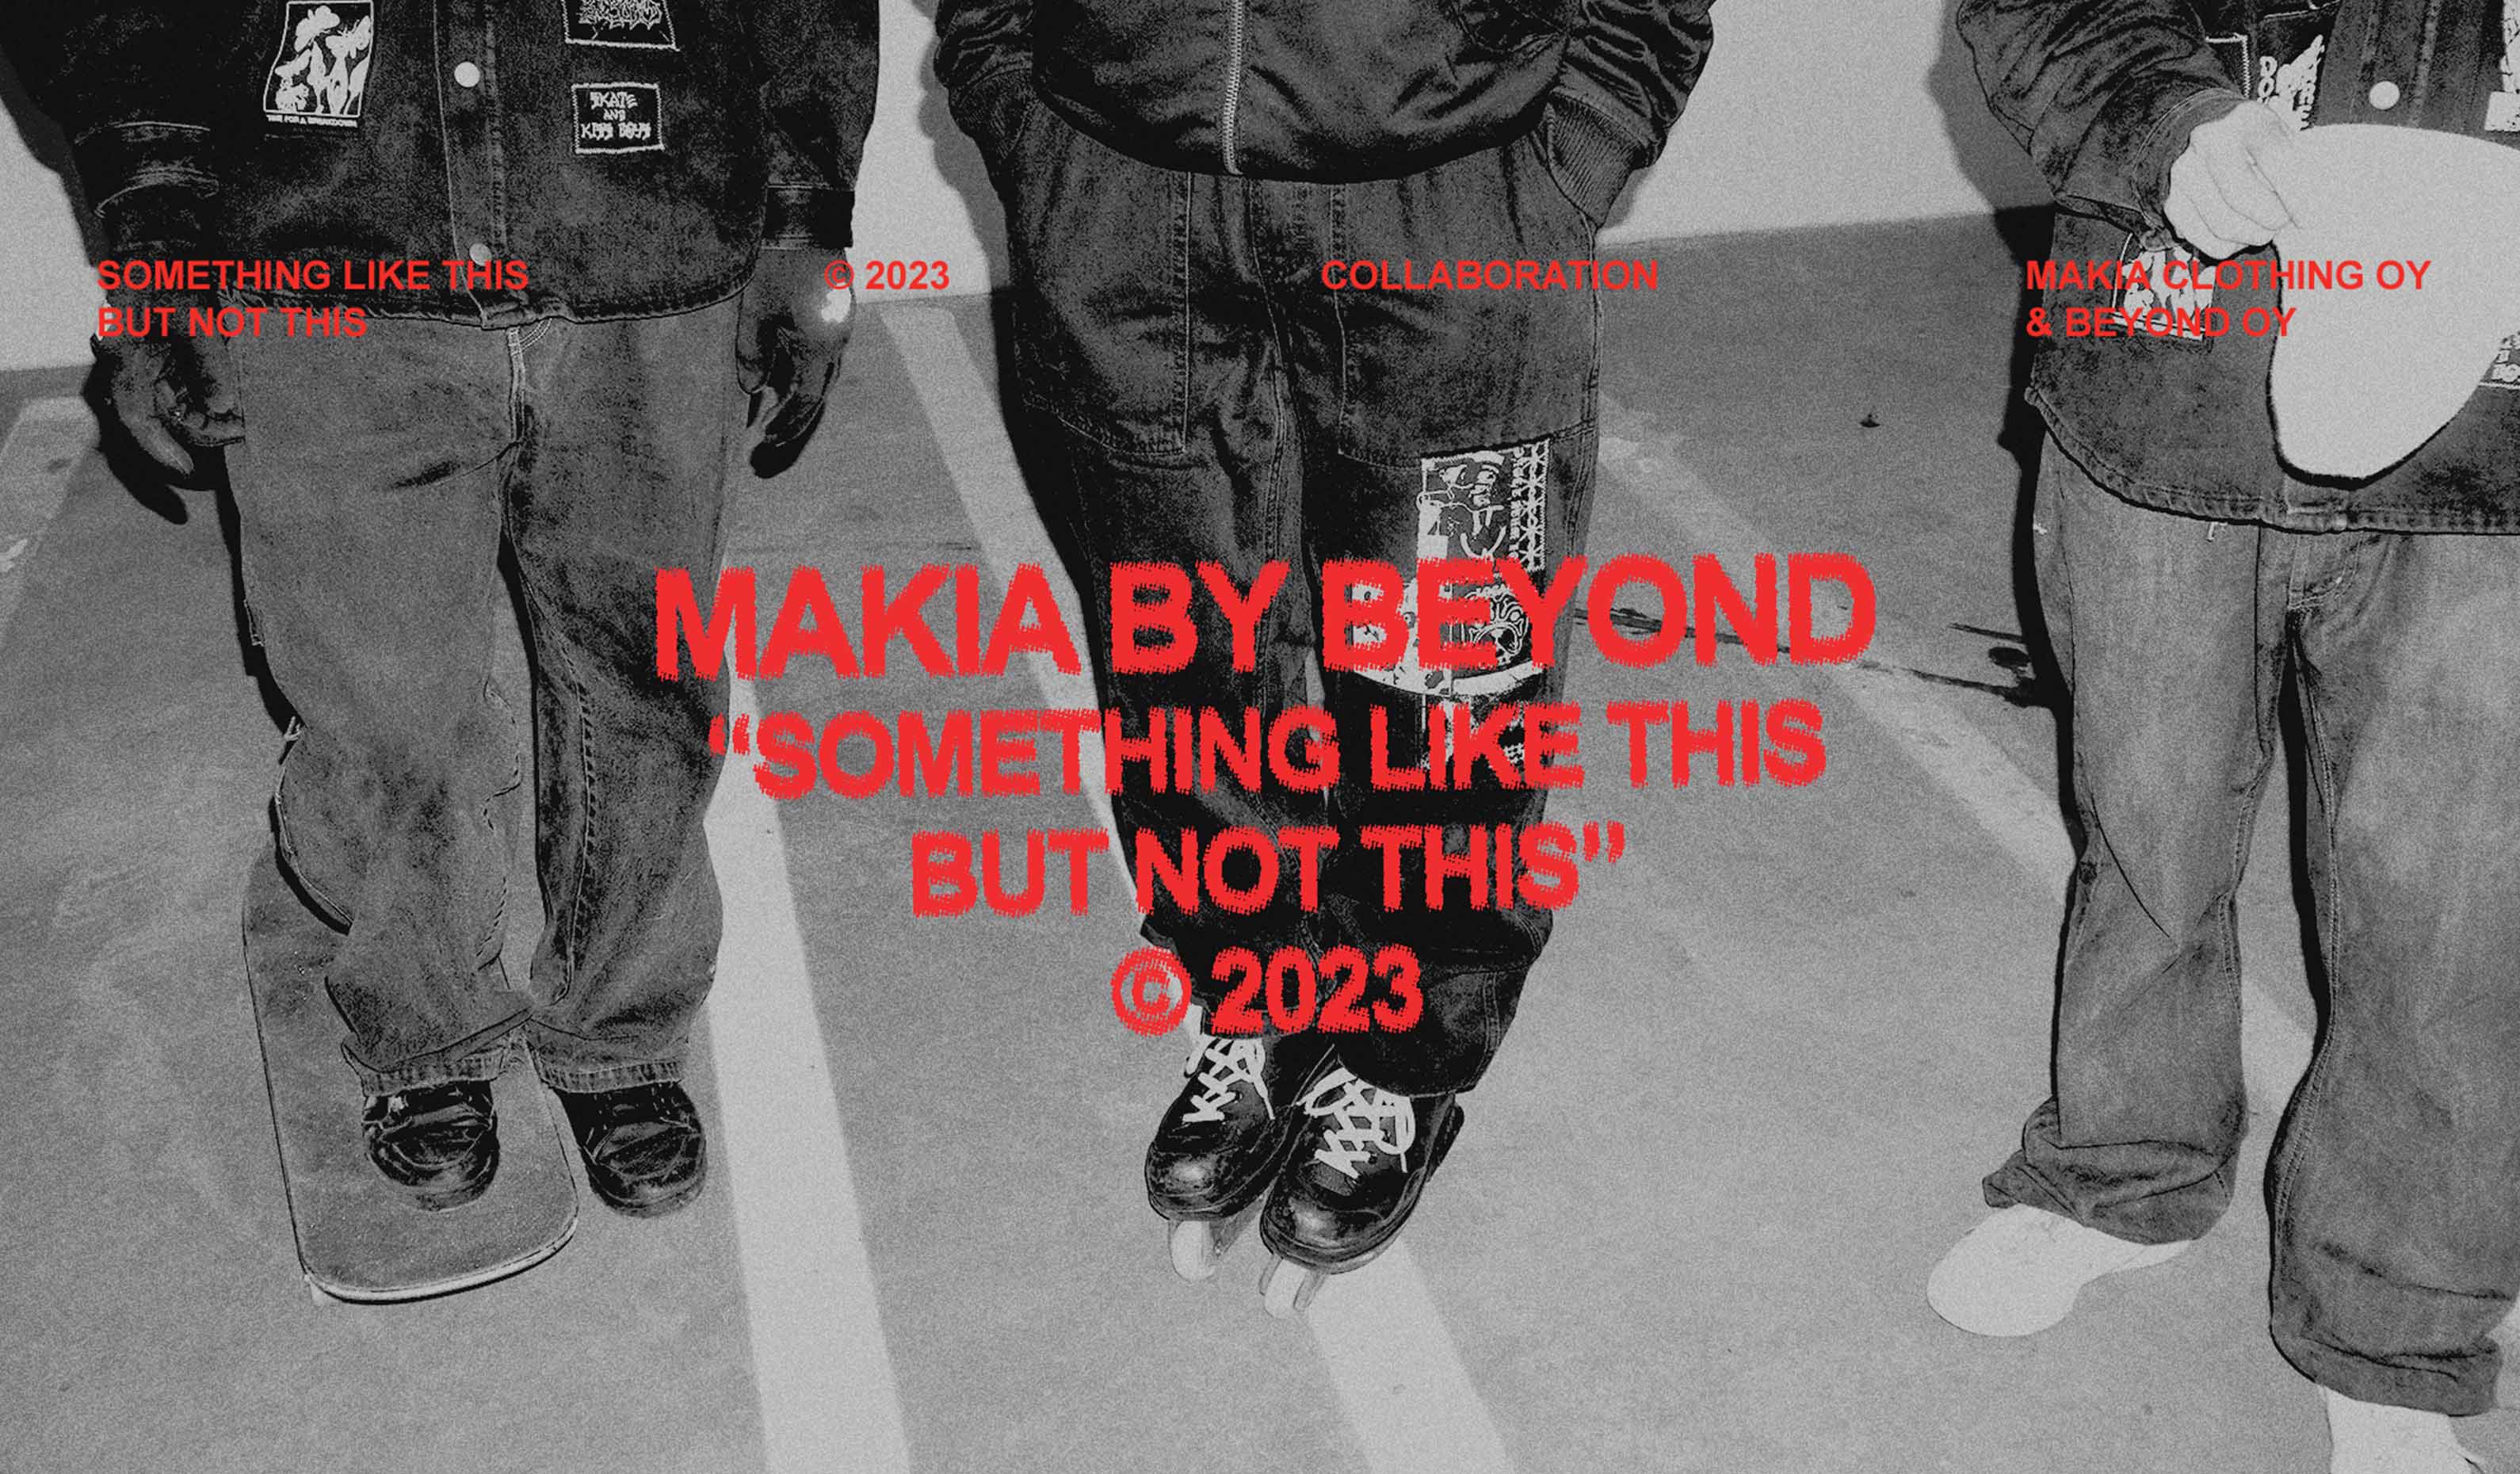 Makia by Beyond